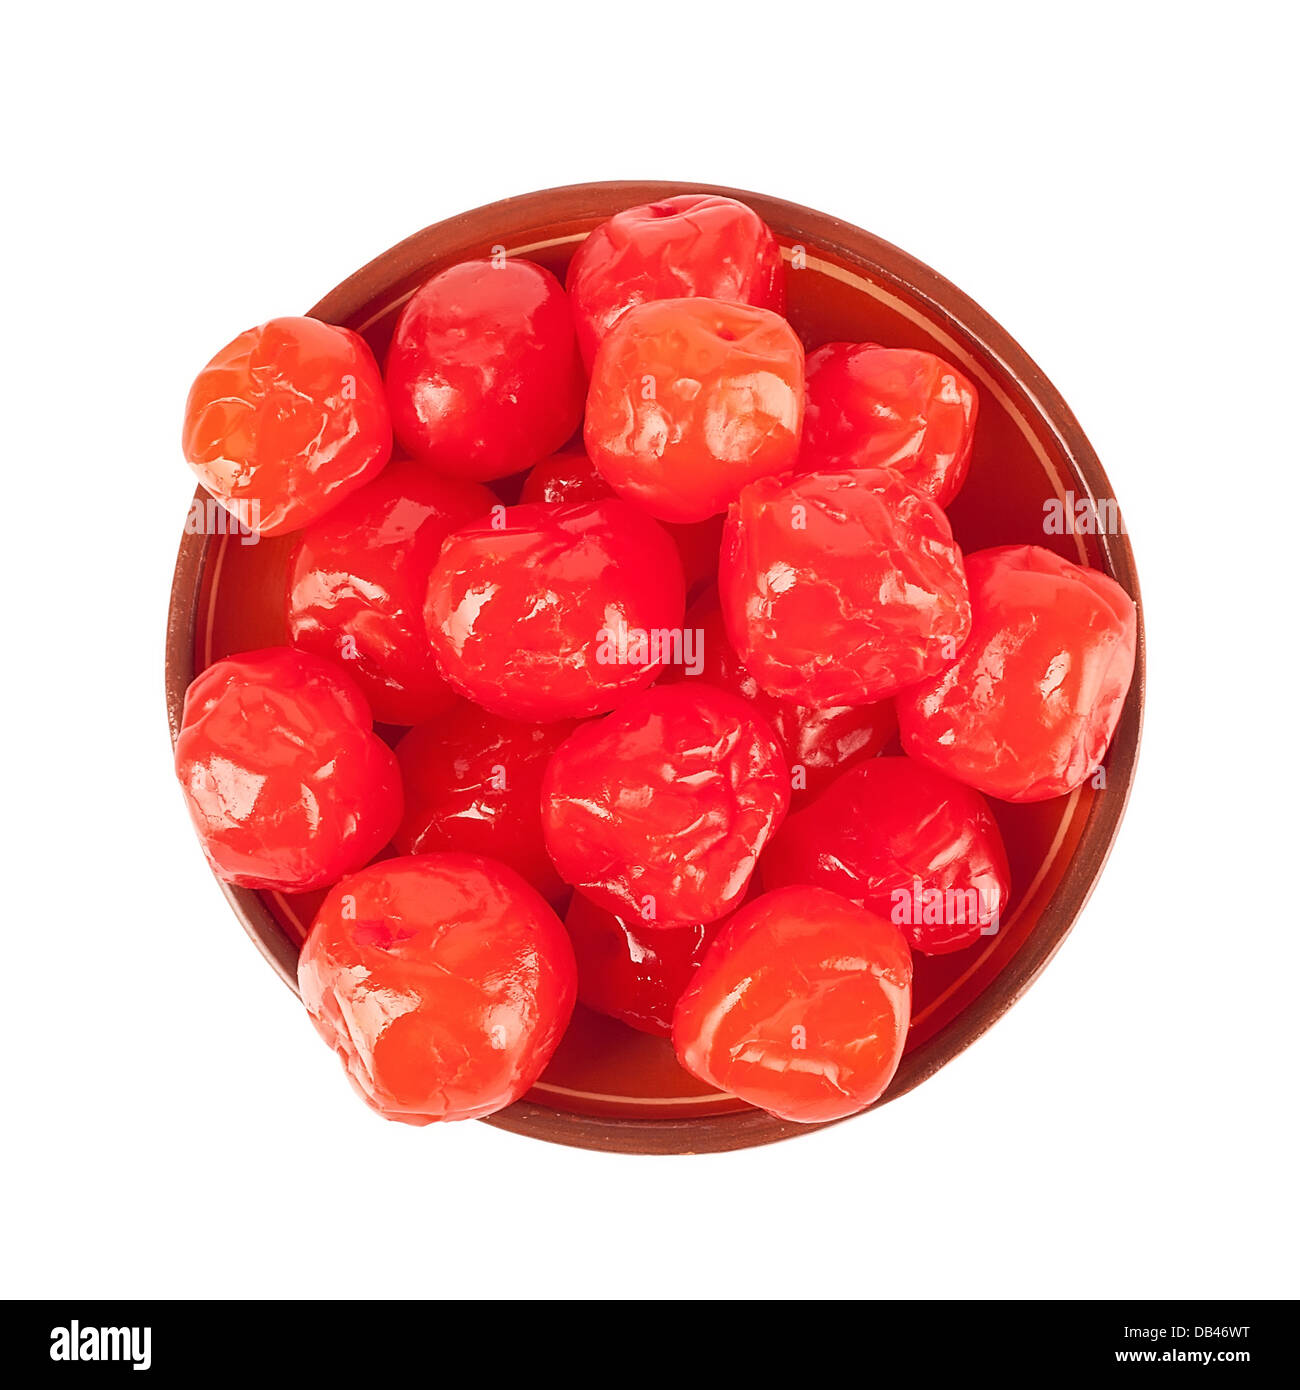 Sun-dried cherries on ceramic dish, isolated over white Stock Photo